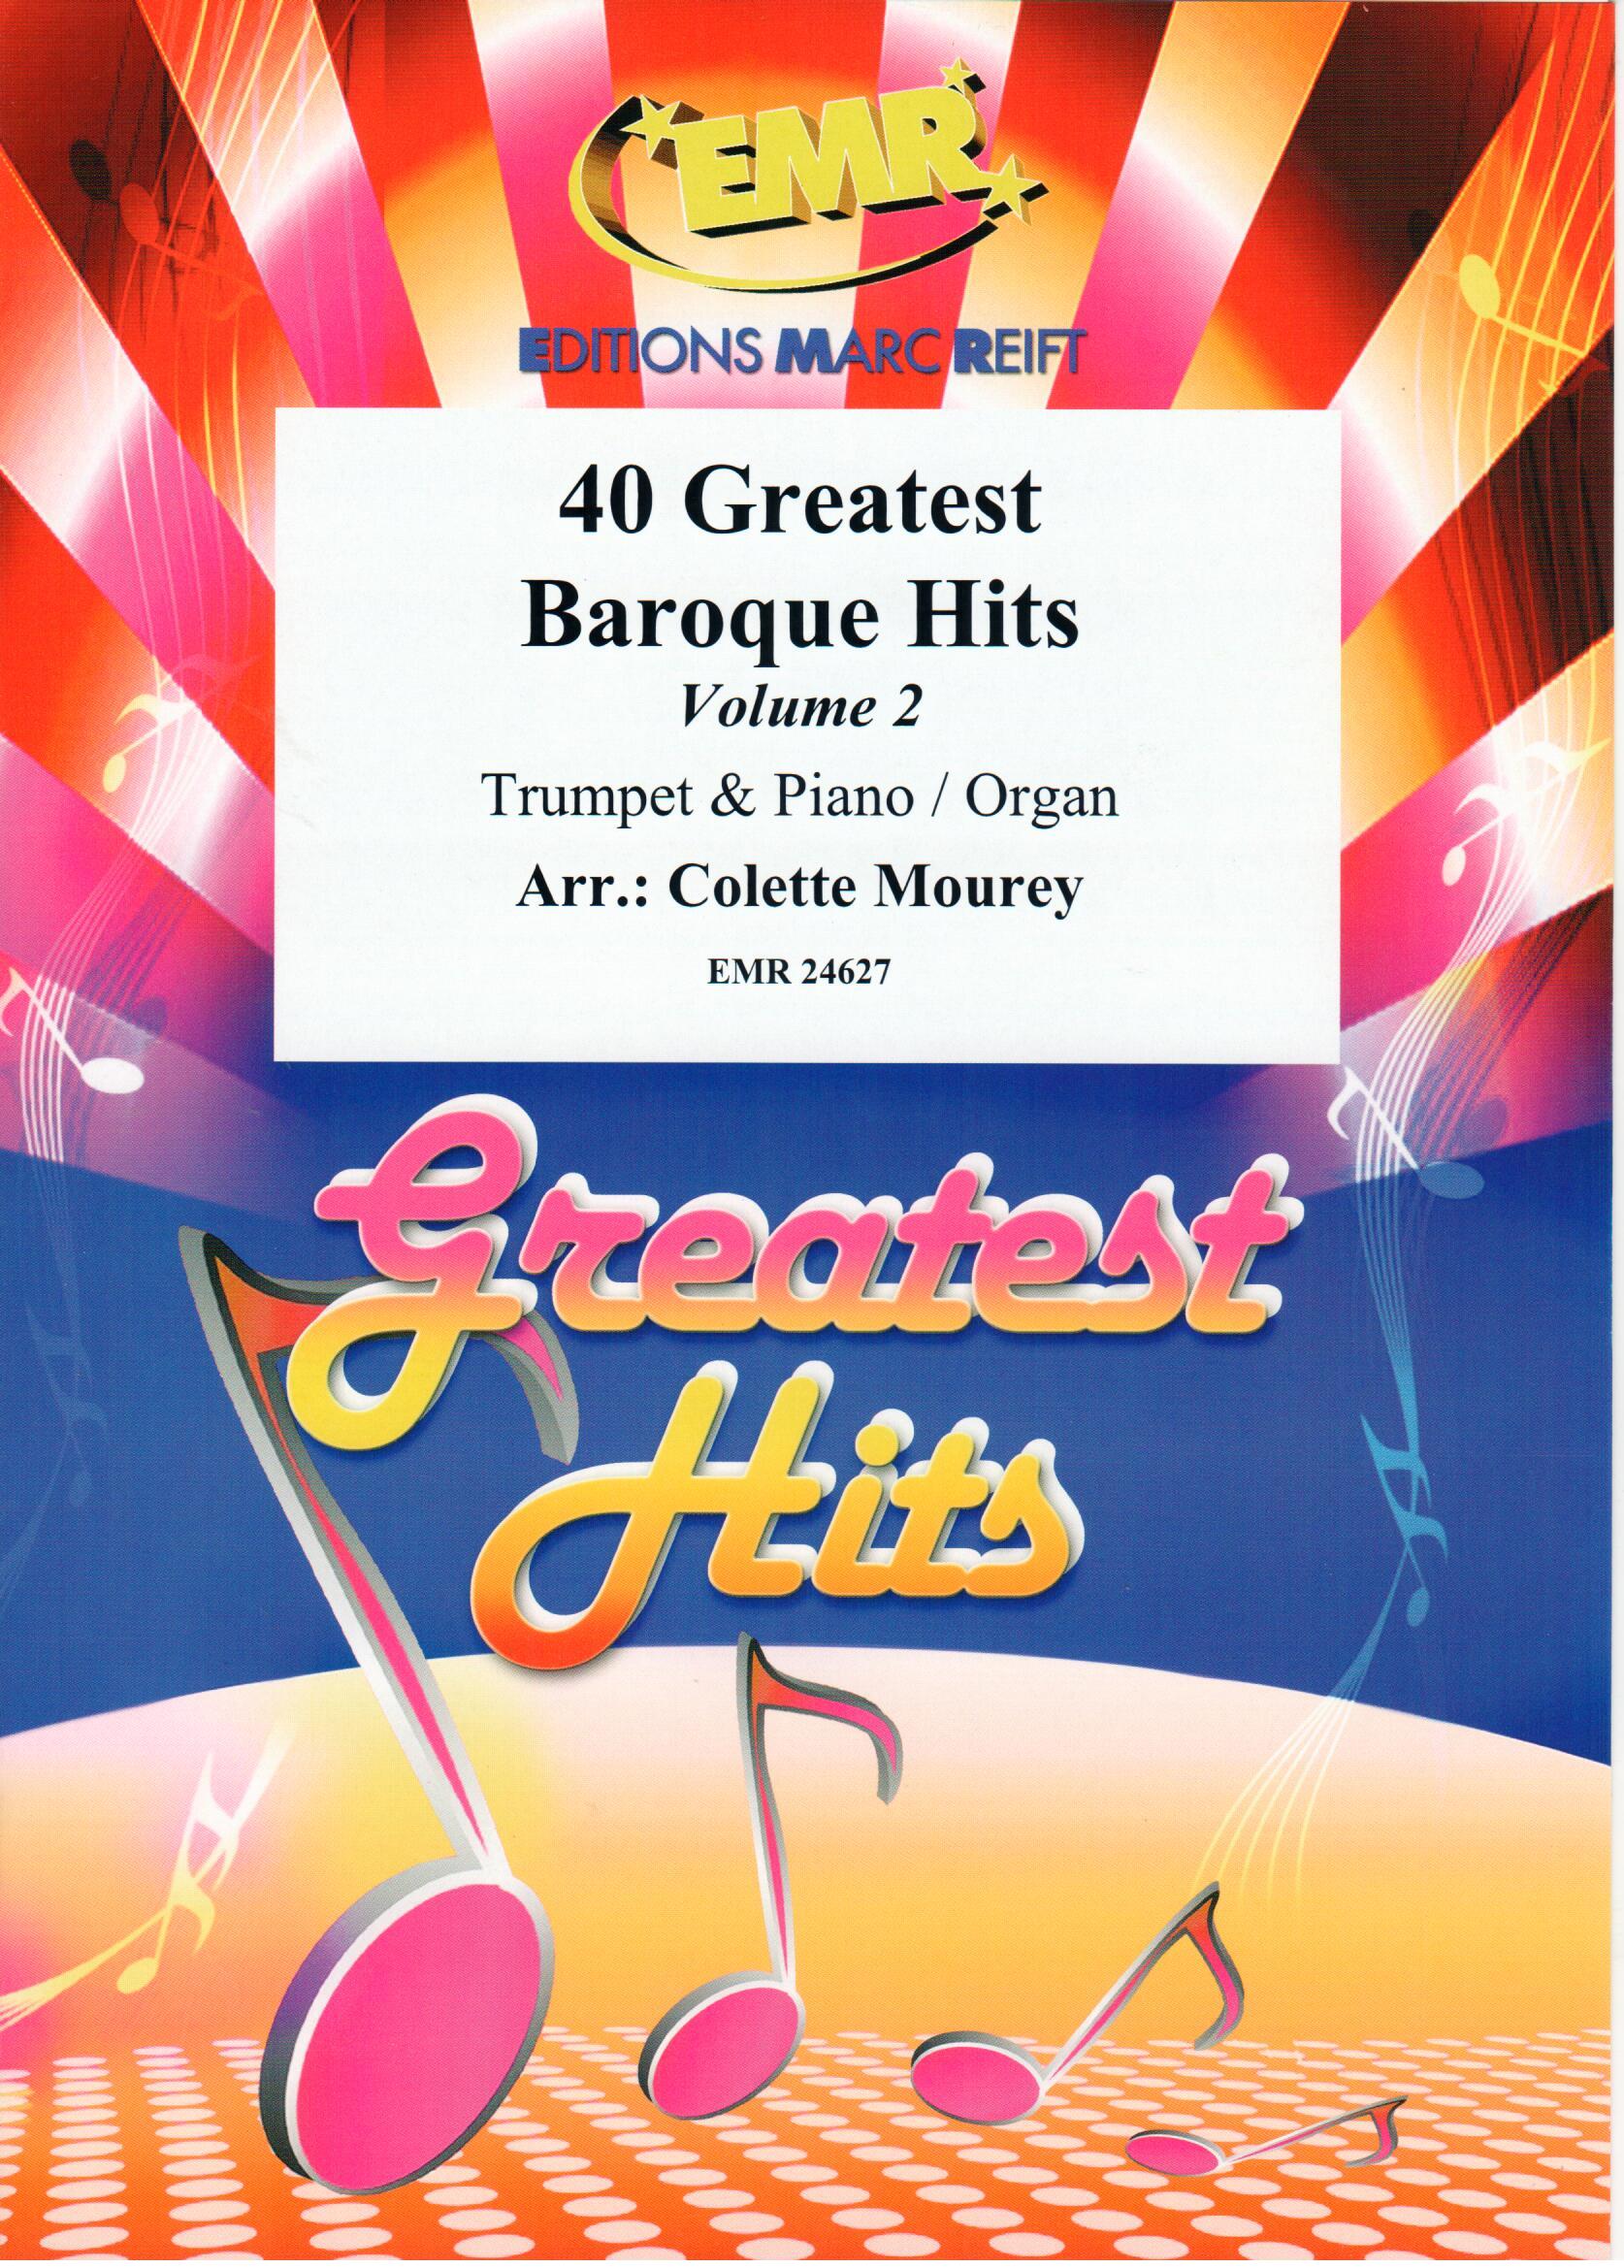 40 GREATEST BAROQUE HITS VOLUME 2